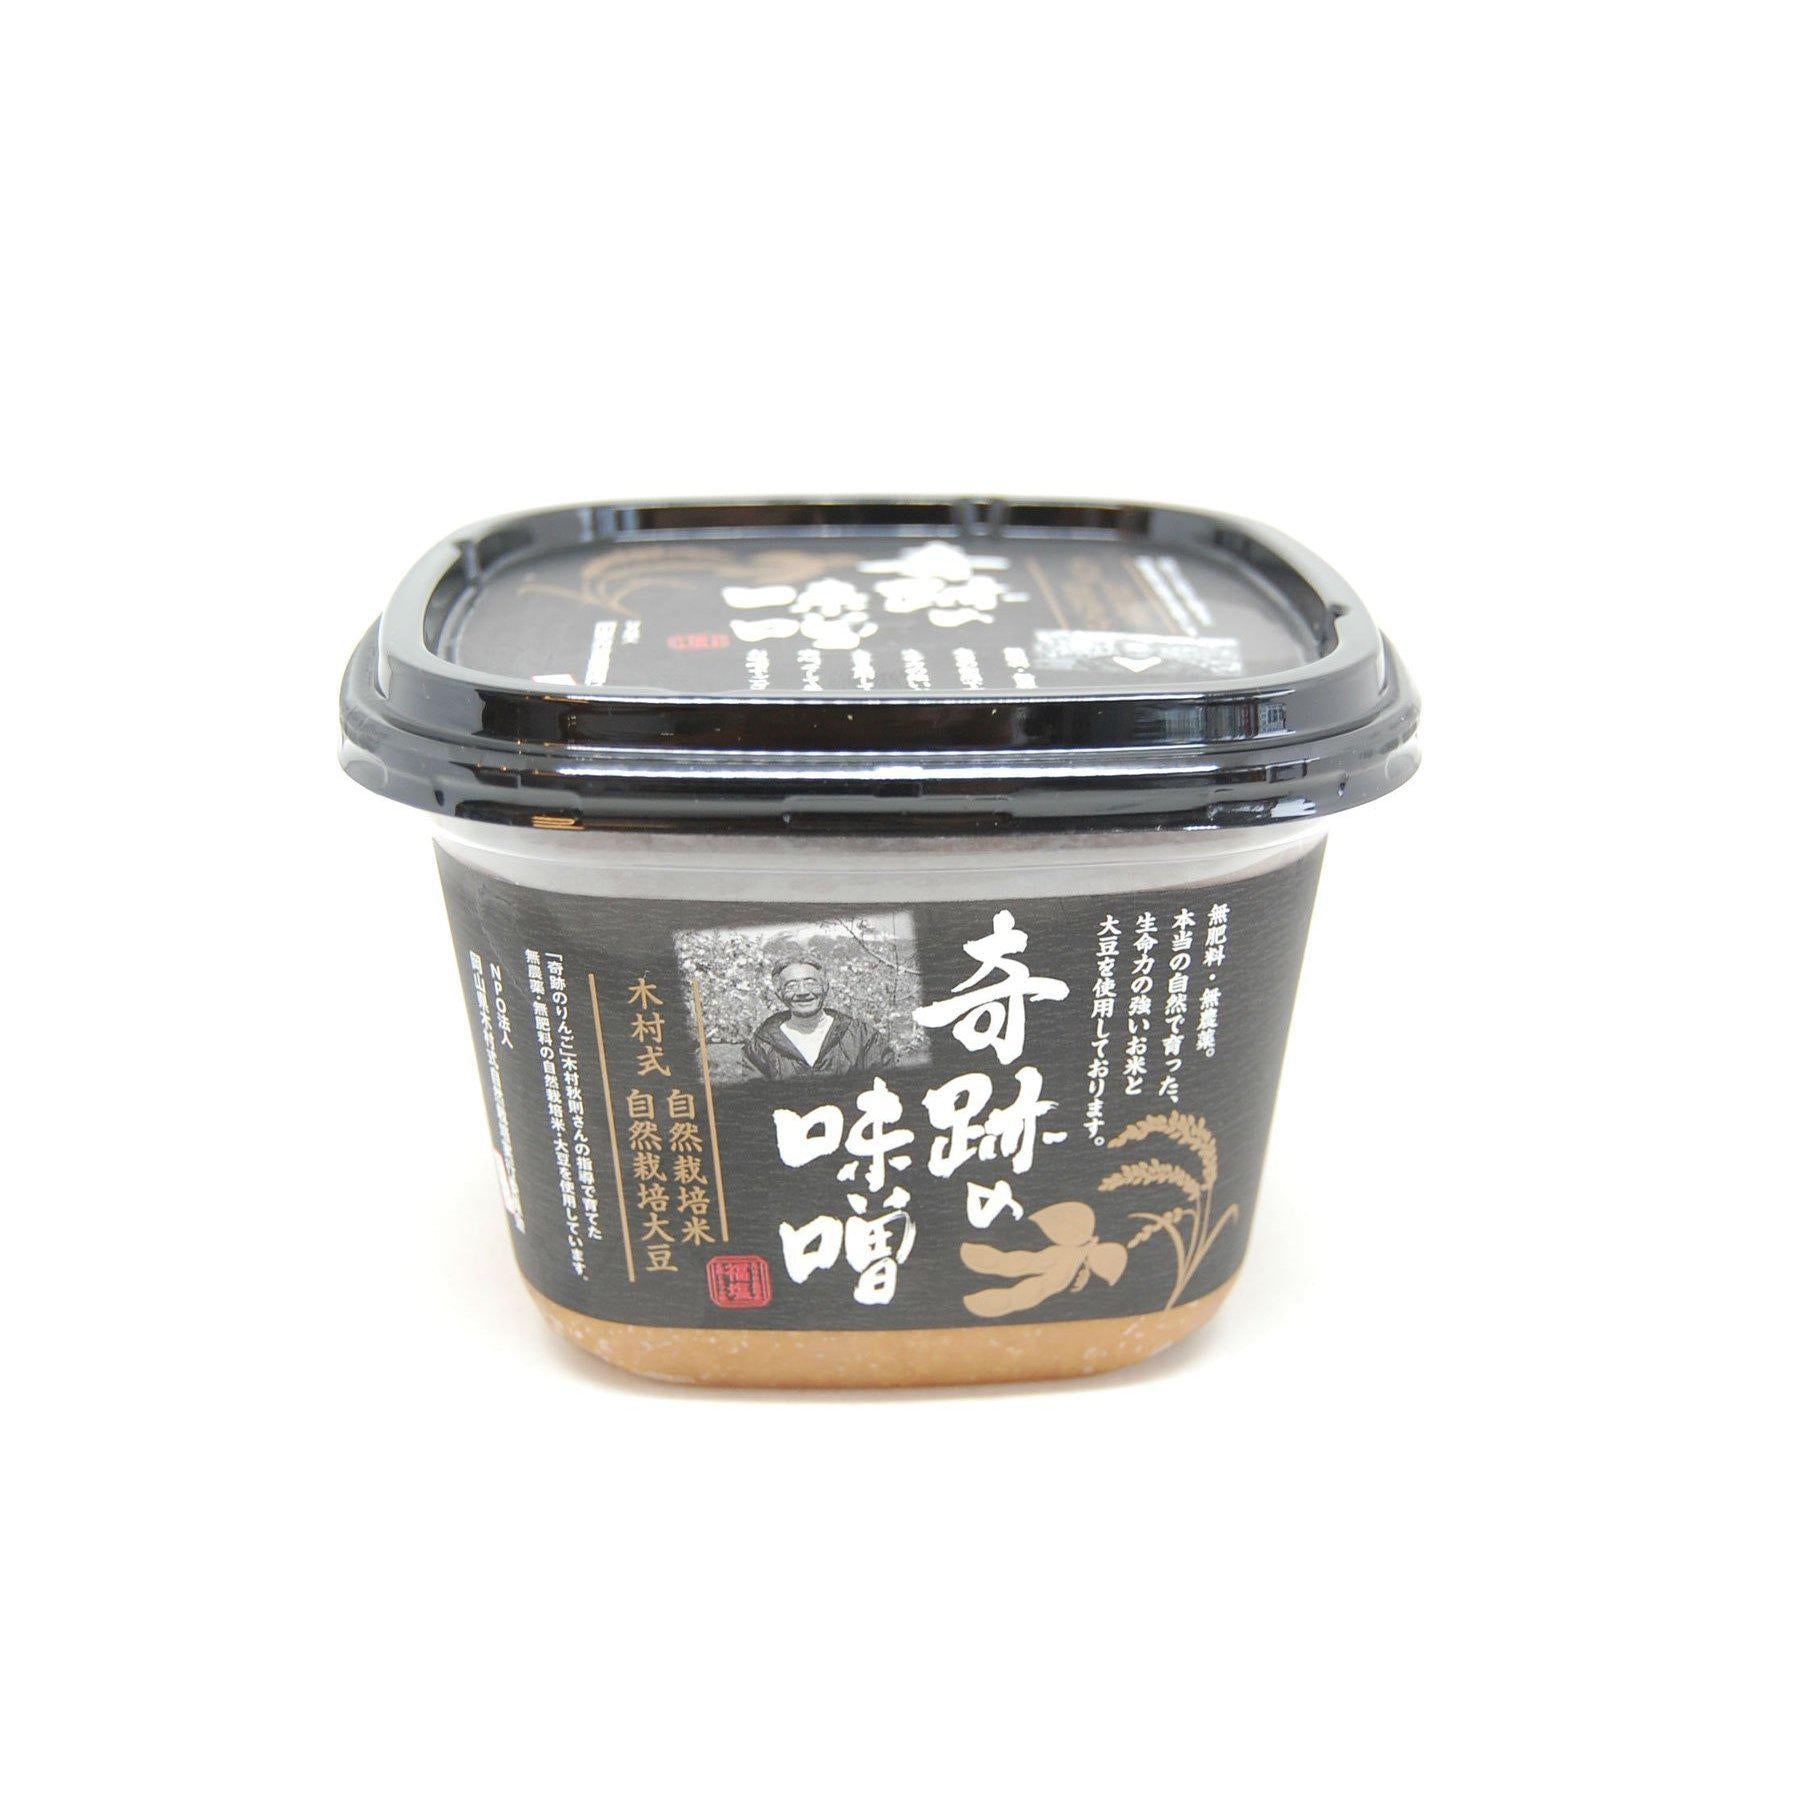 Marumikoji Kiseki Natural Miso (Japanese Miso Paste) 750g, Japanese Taste